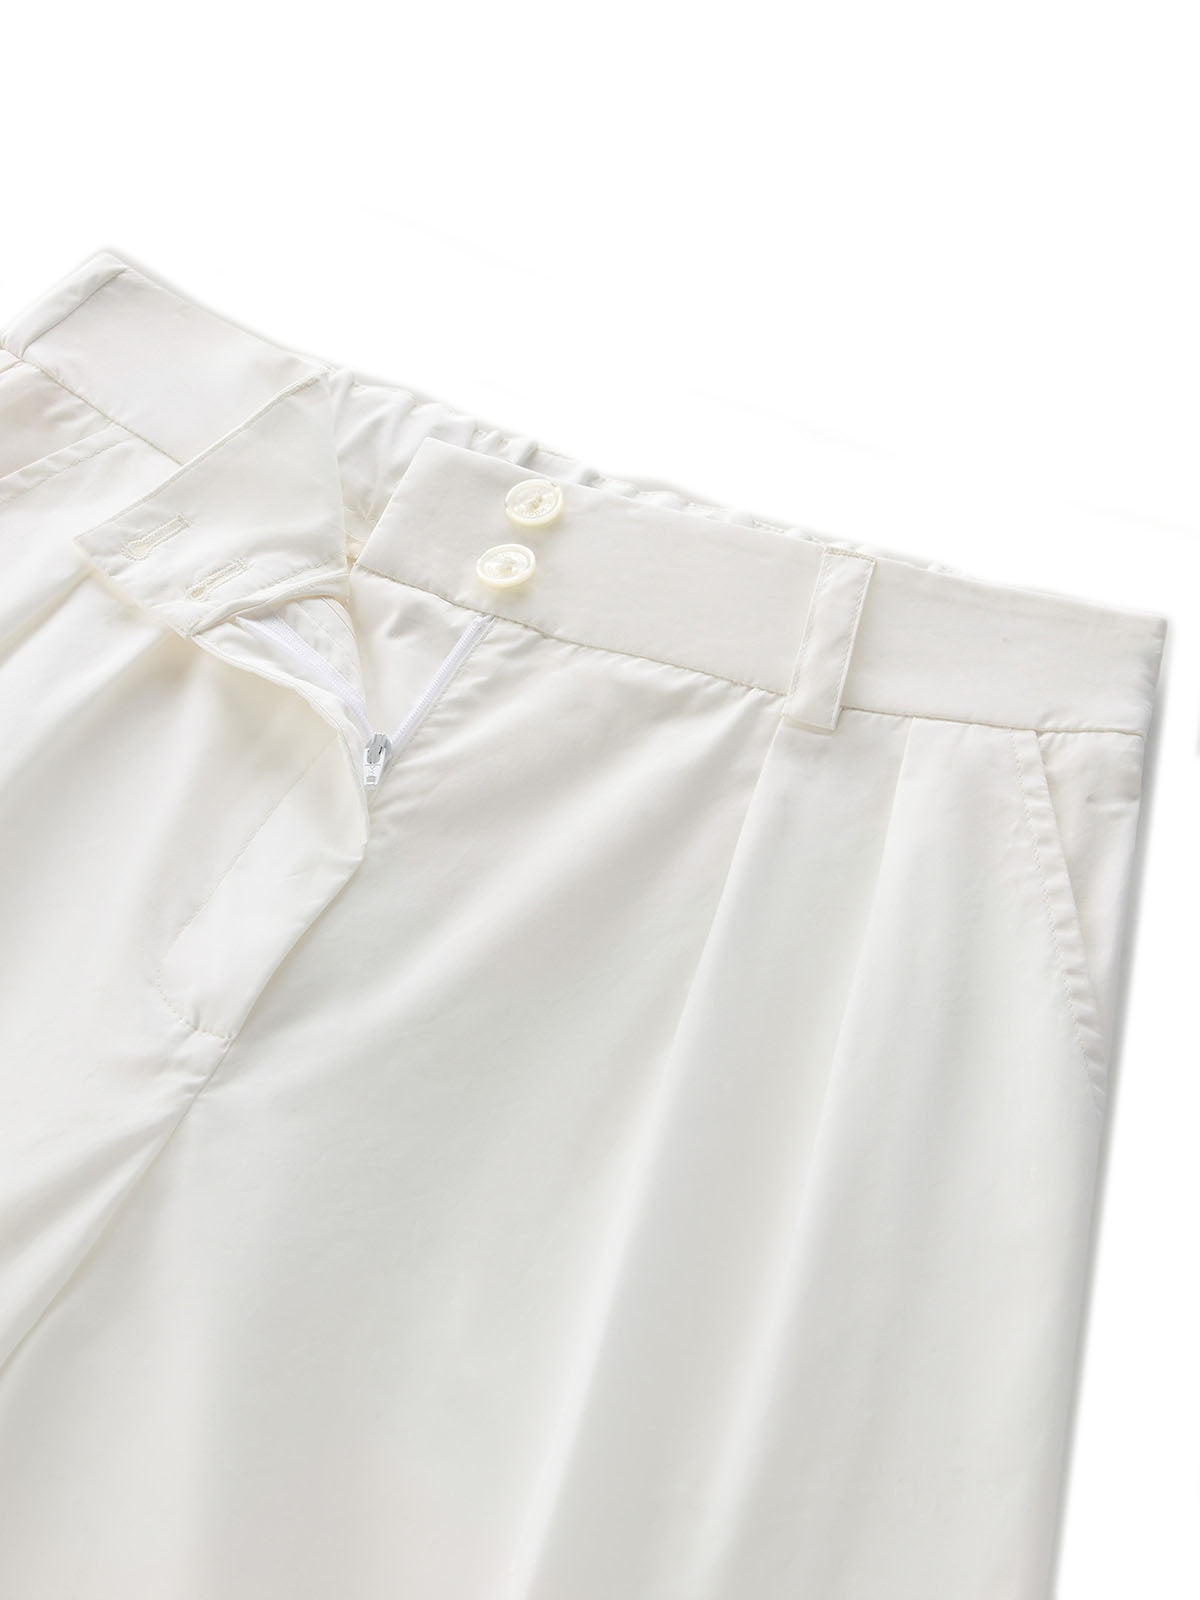 Pantaloni Donna Woolrich - Pantaloni In Popeline Di Puro Cotone - Bianco